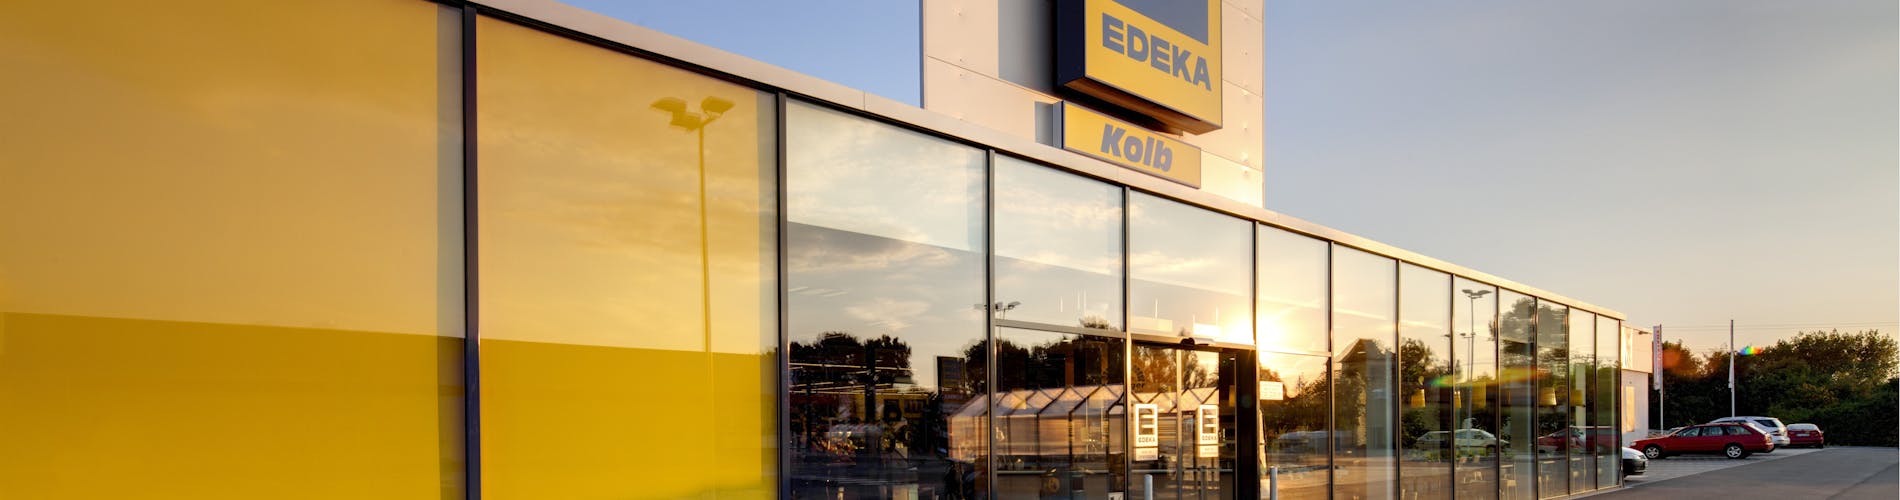 EDEKA store employee app retail